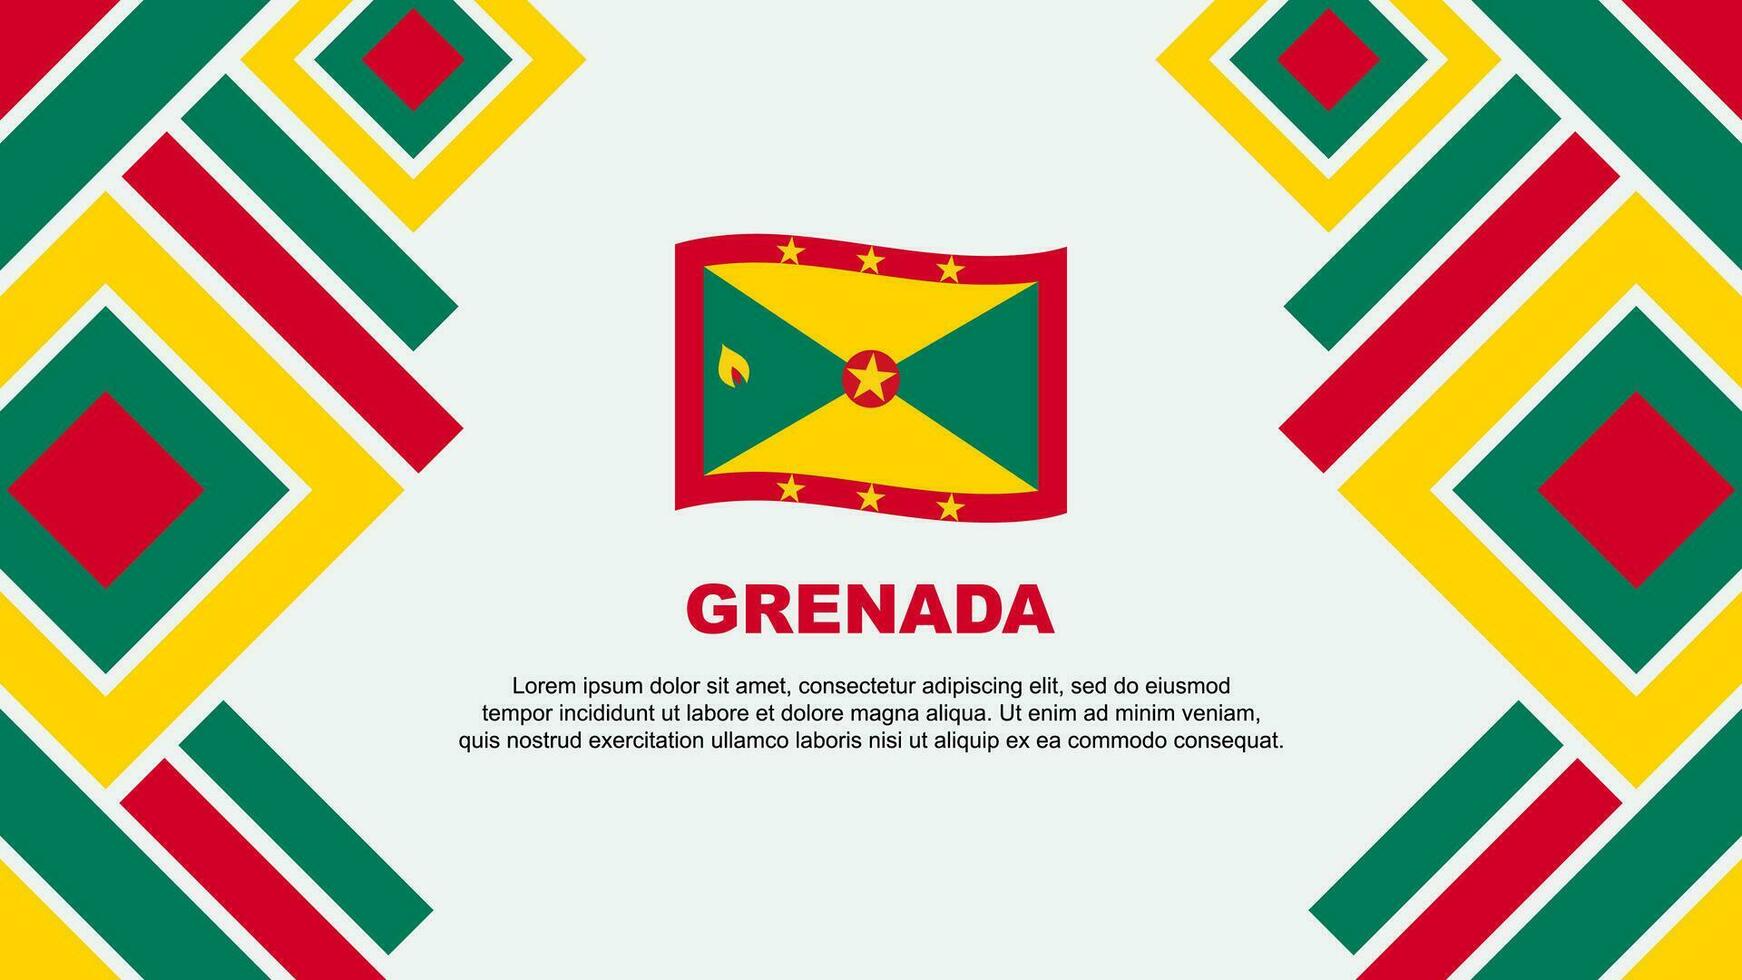 Grenada Flag Abstract Background Design Template. Grenada Independence Day Banner Wallpaper Vector Illustration. Grenada